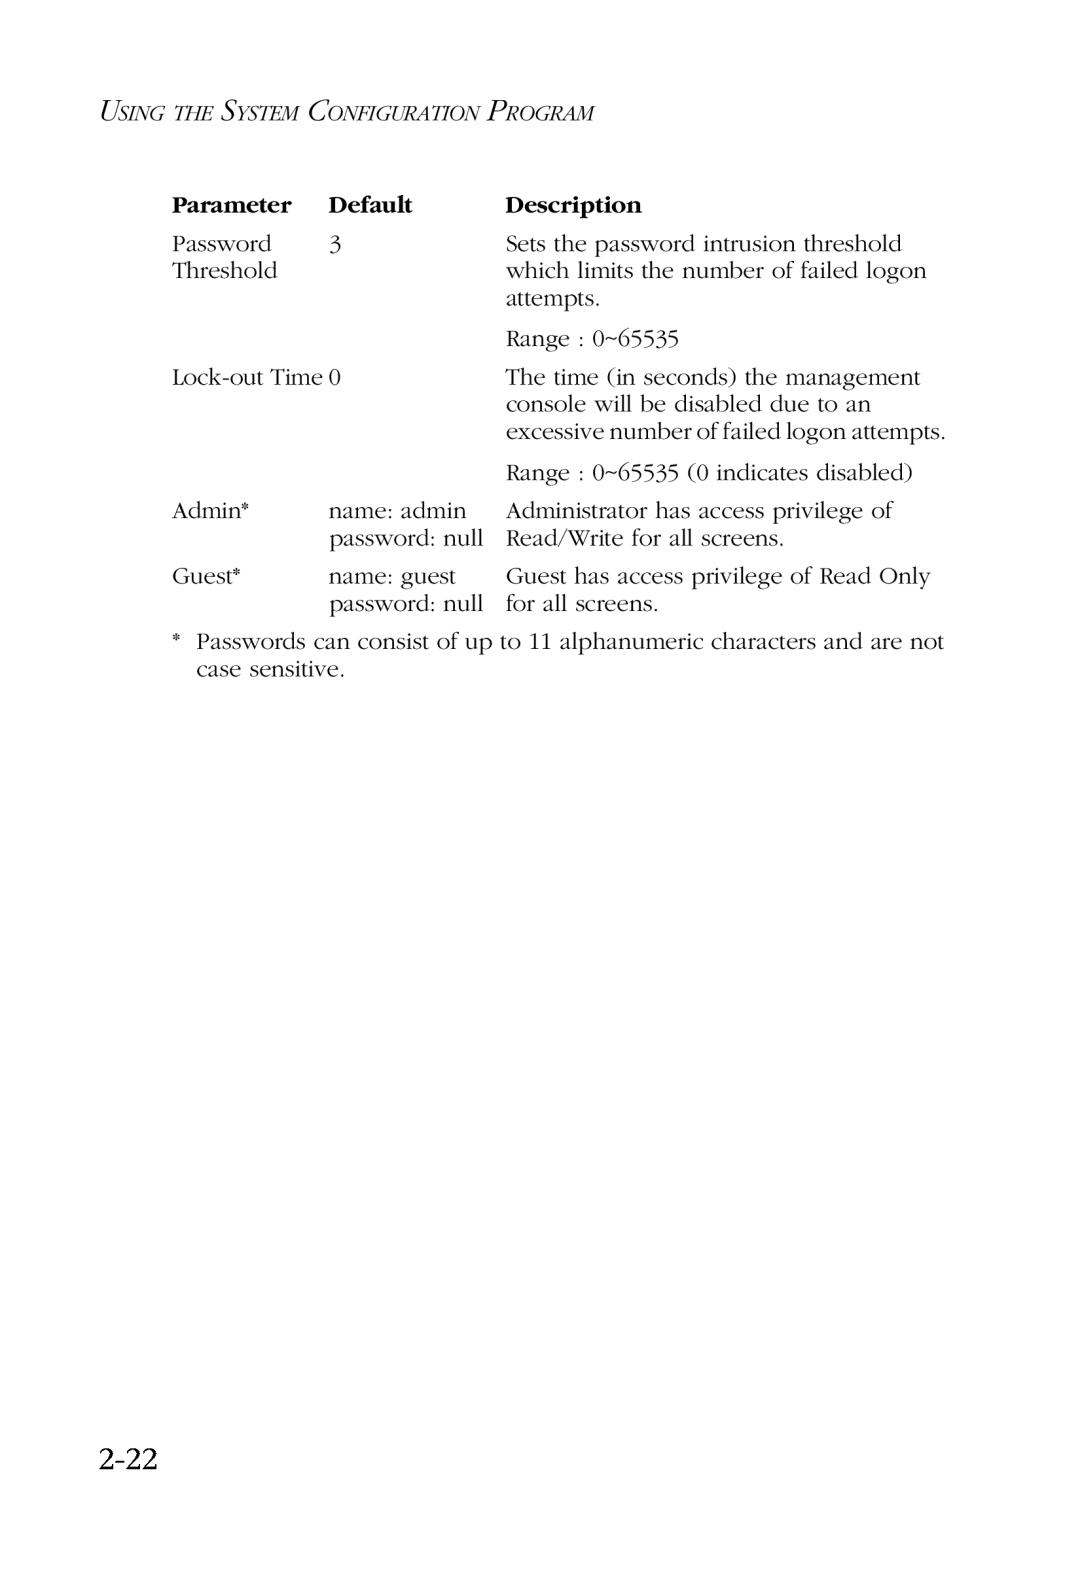 SMC Networks SMC6924VF manual 2-22, Parameter, Default, Description 